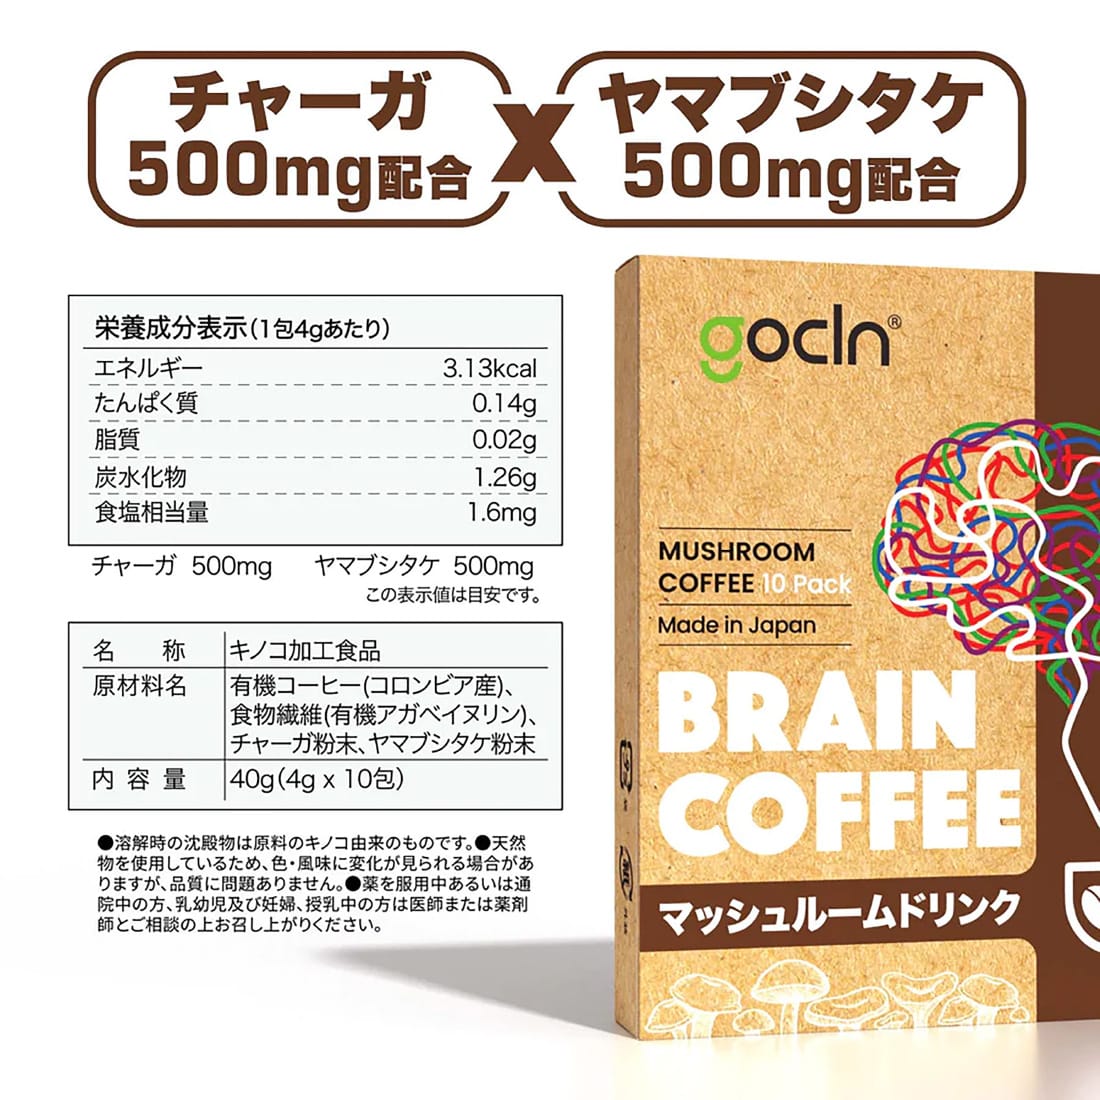 Brain Coffee マッシュルームコーヒー 10杯 - gocln